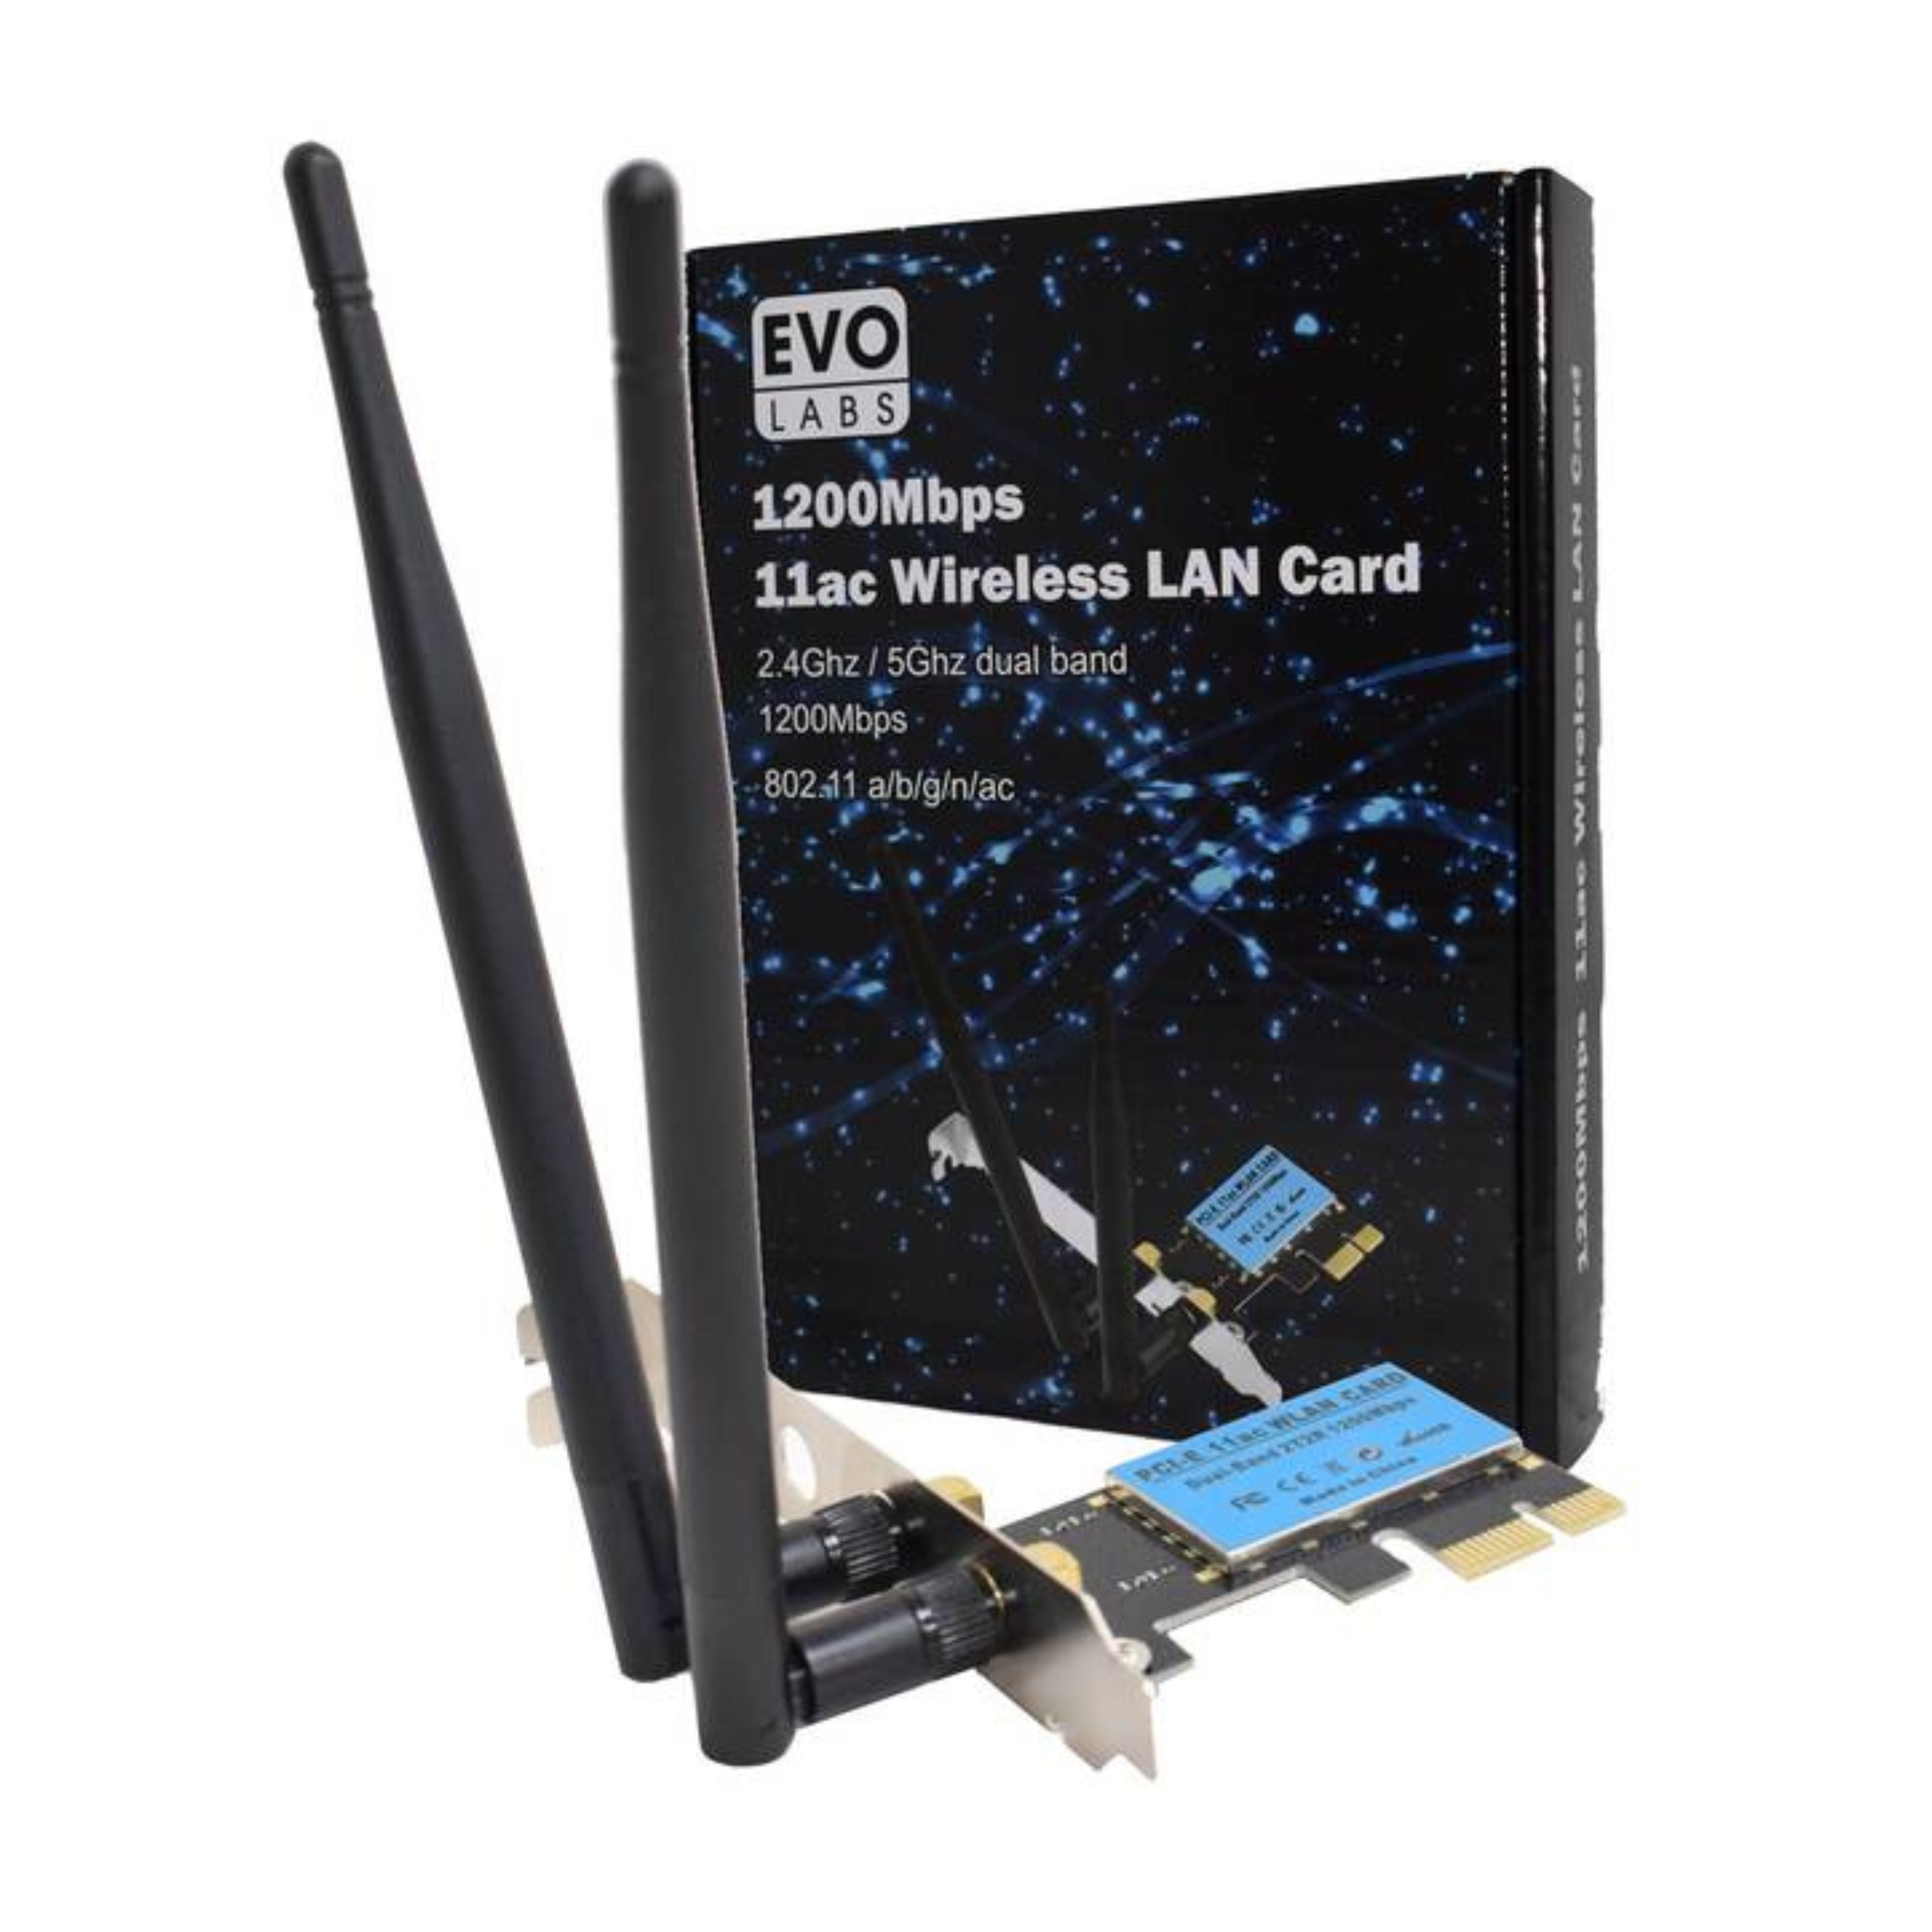 Evo Labs 1200Mbps 11ac Wireless LAN Card